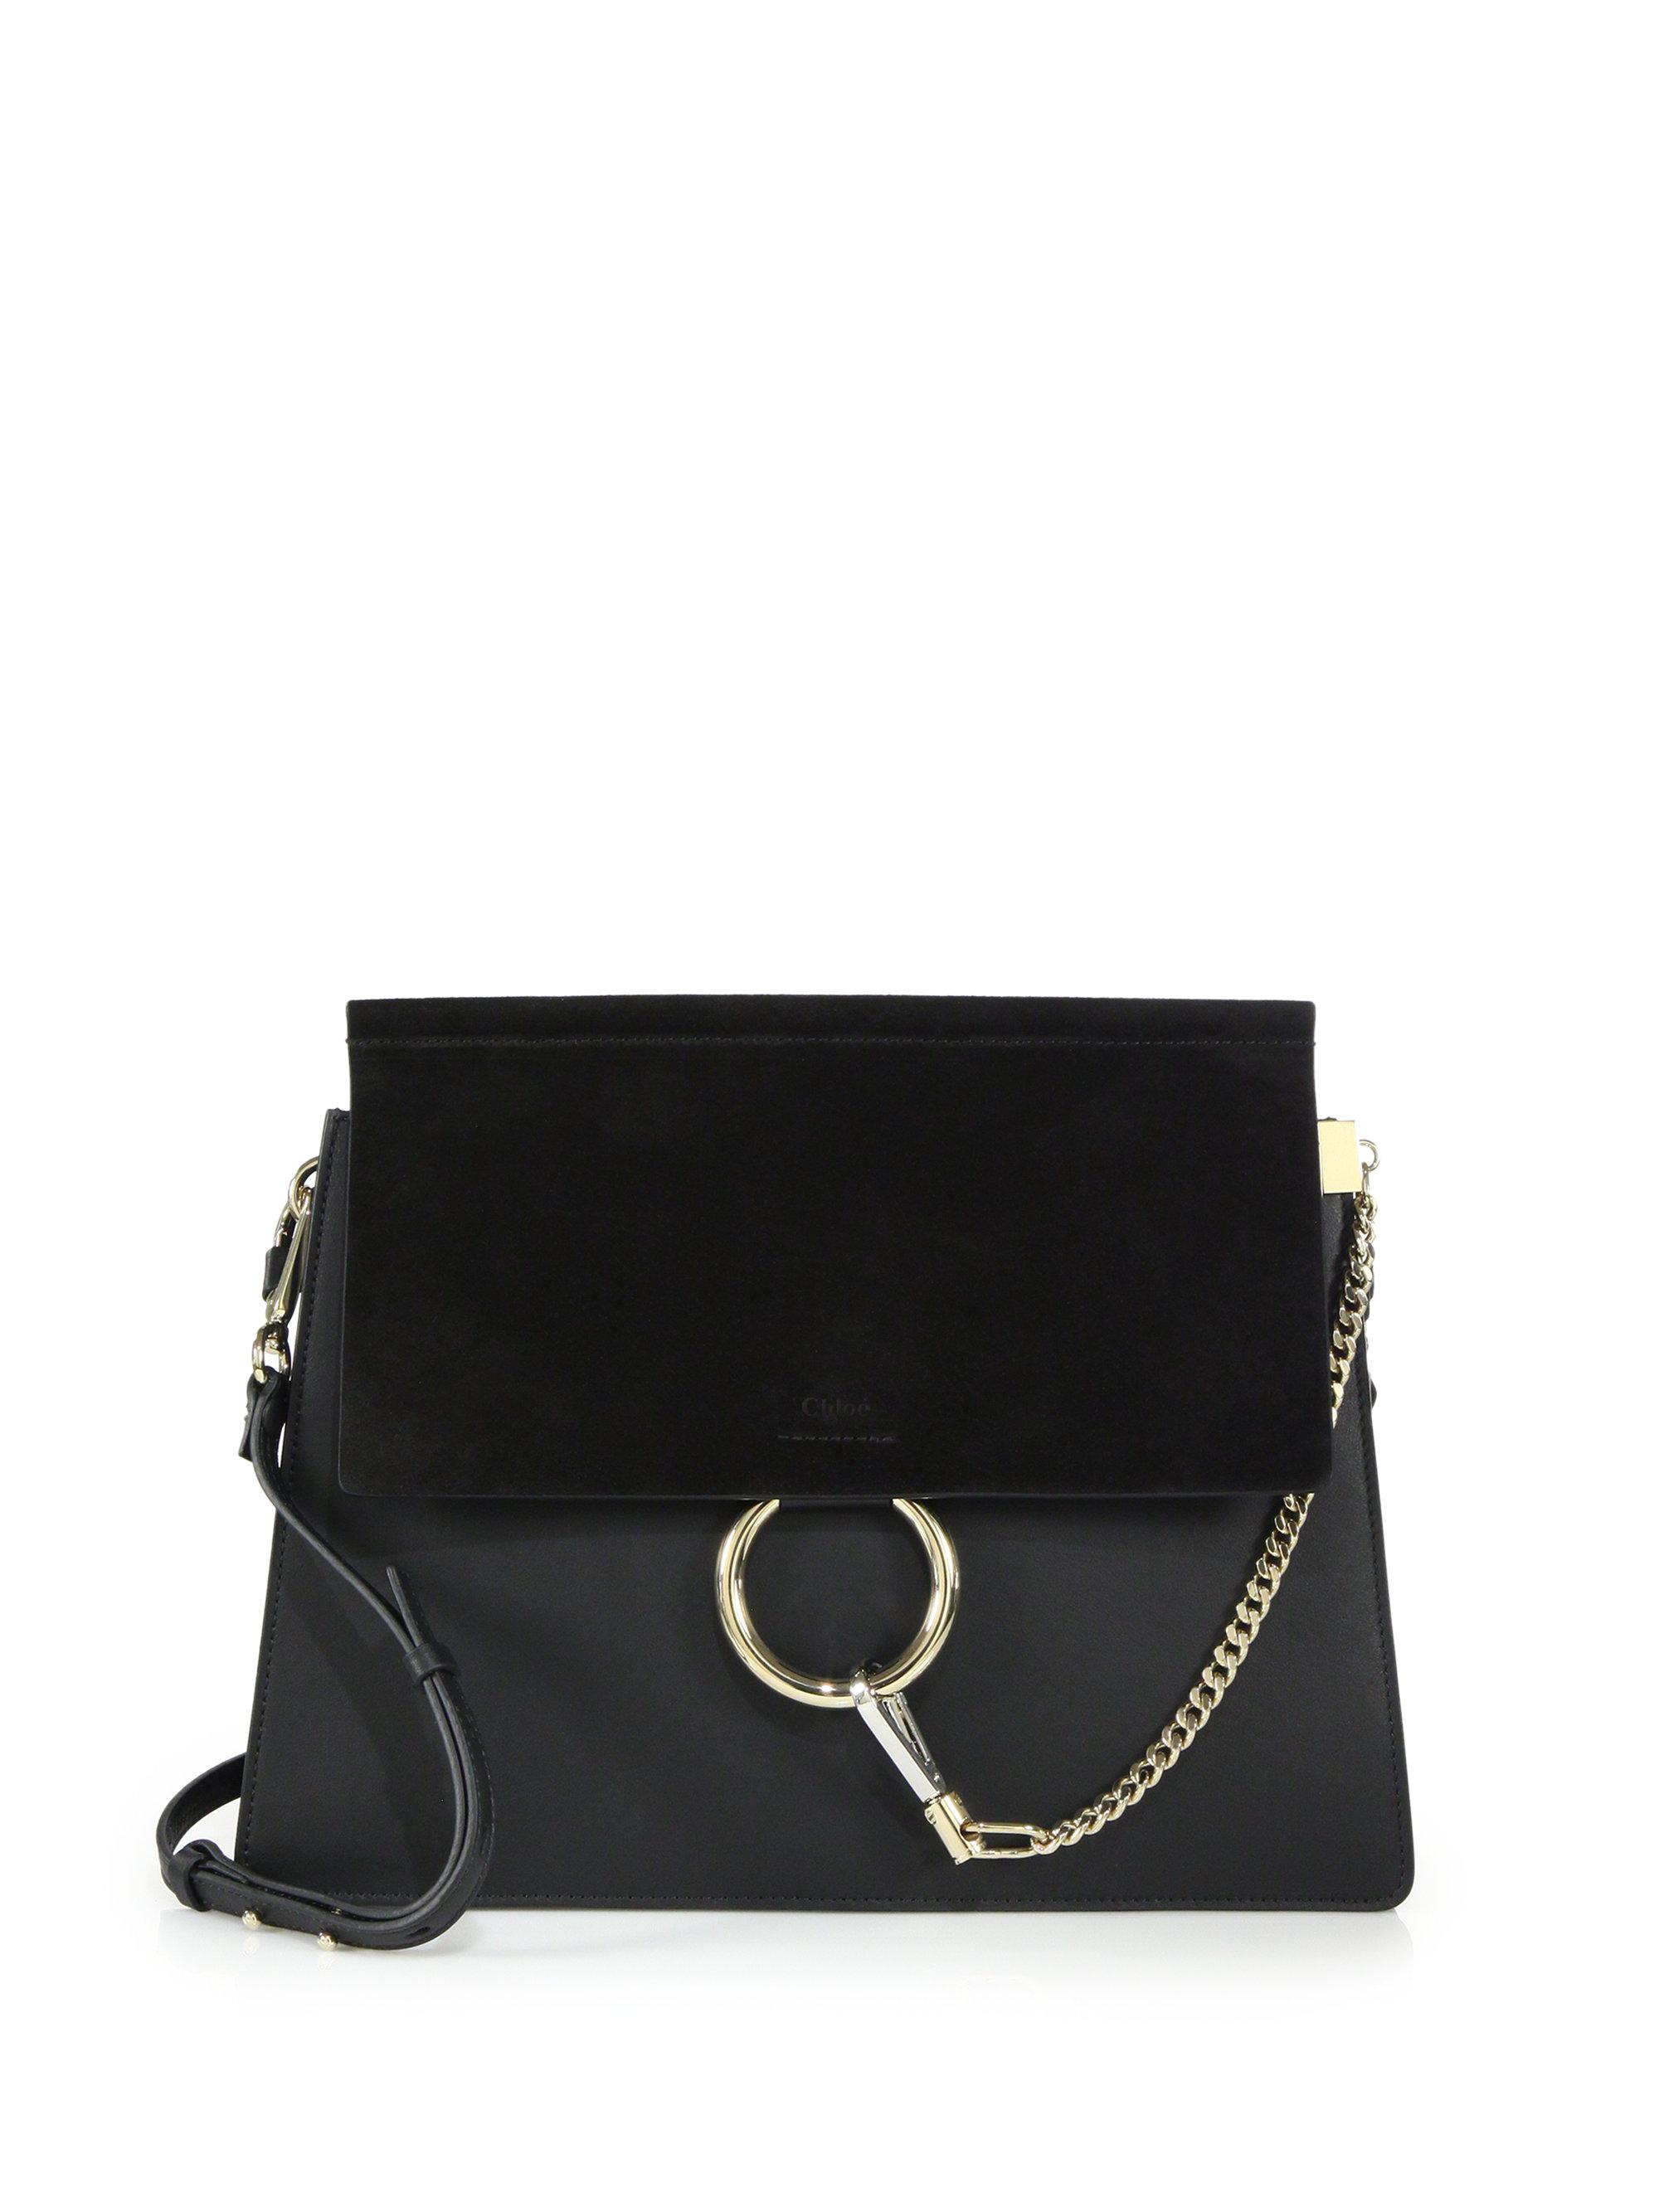 Lyst - Chloé Faye Medium Suede & Leather Shoulder Bag in Black